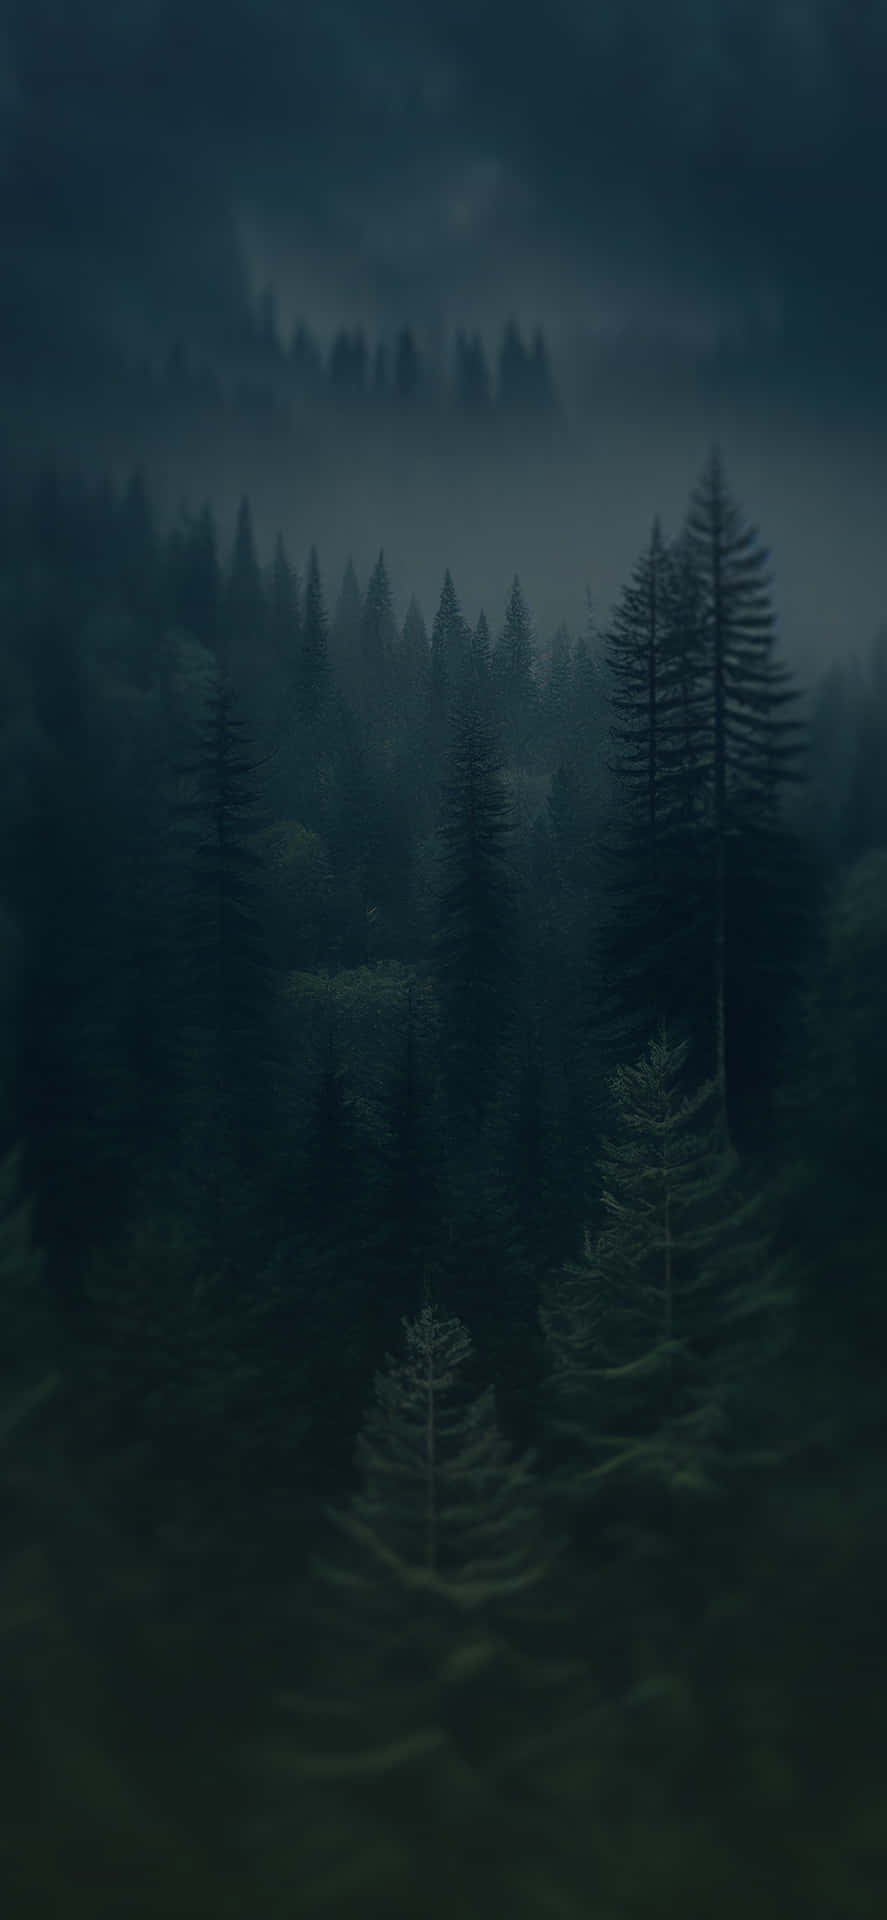 Misty_ Forest_ Night_ Mood.jpg Wallpaper